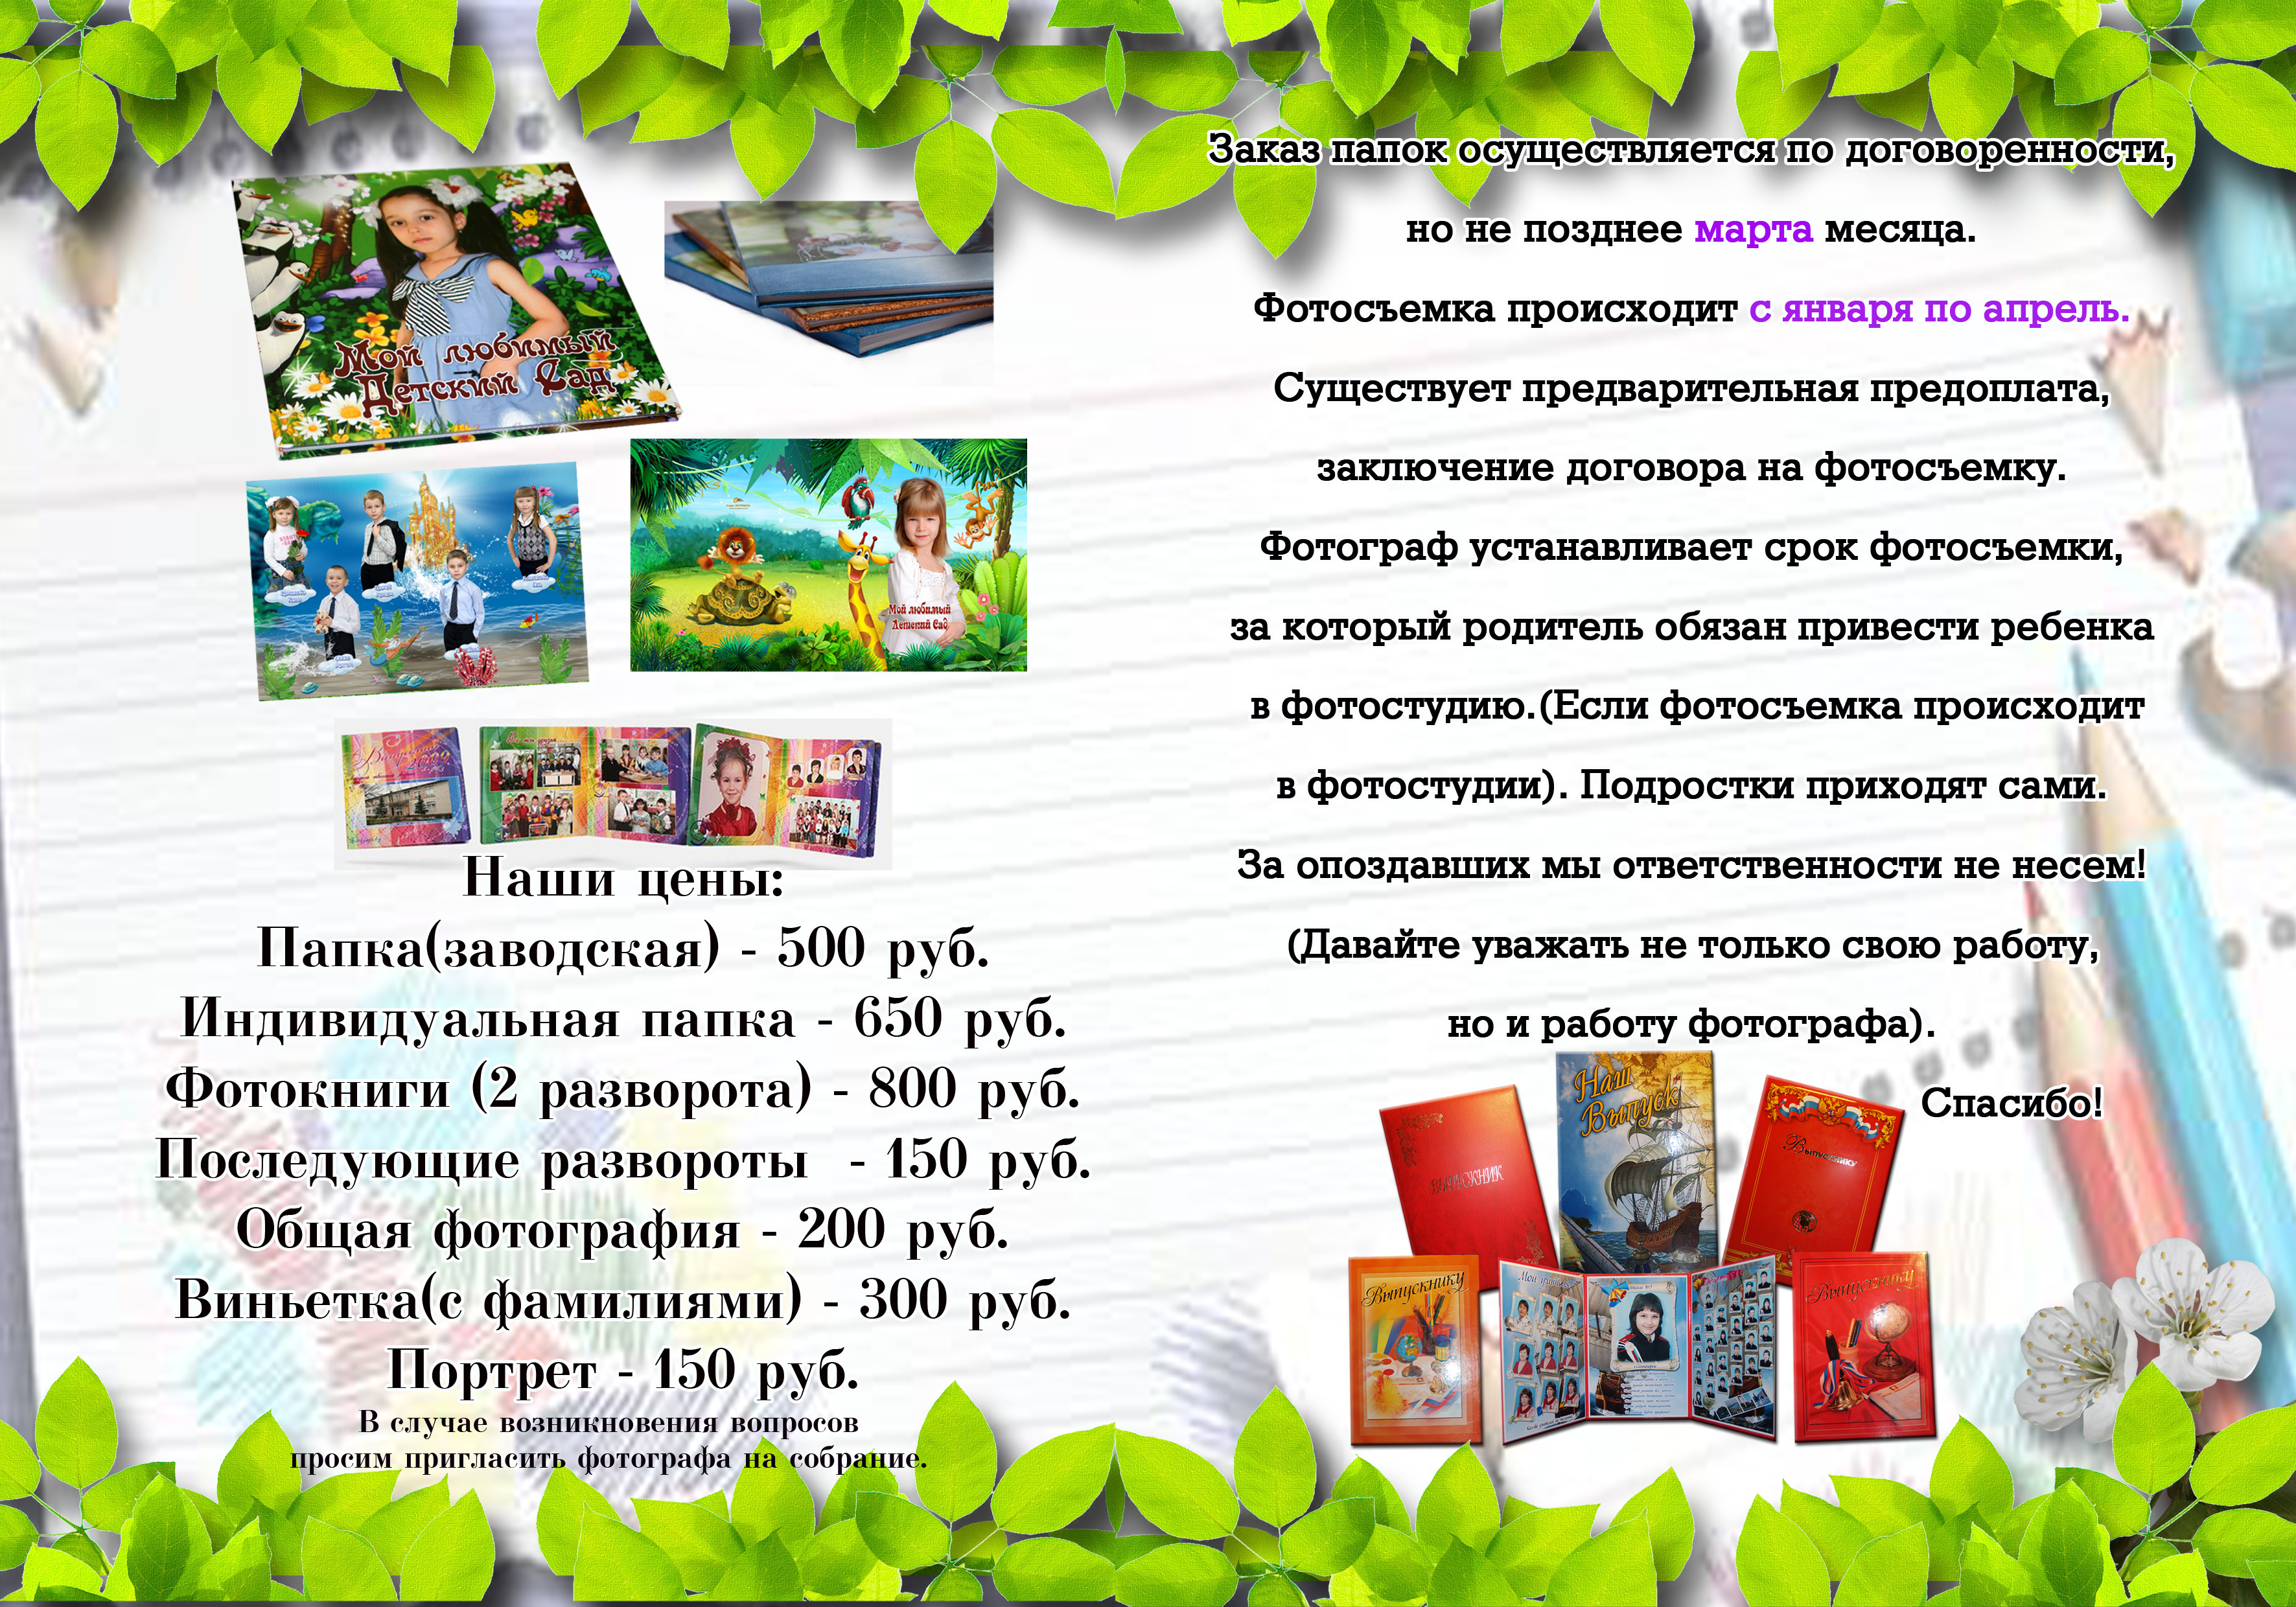 Саяногорск Инфо - vnutrennyaya-broshura.jpg, Скачано: 864